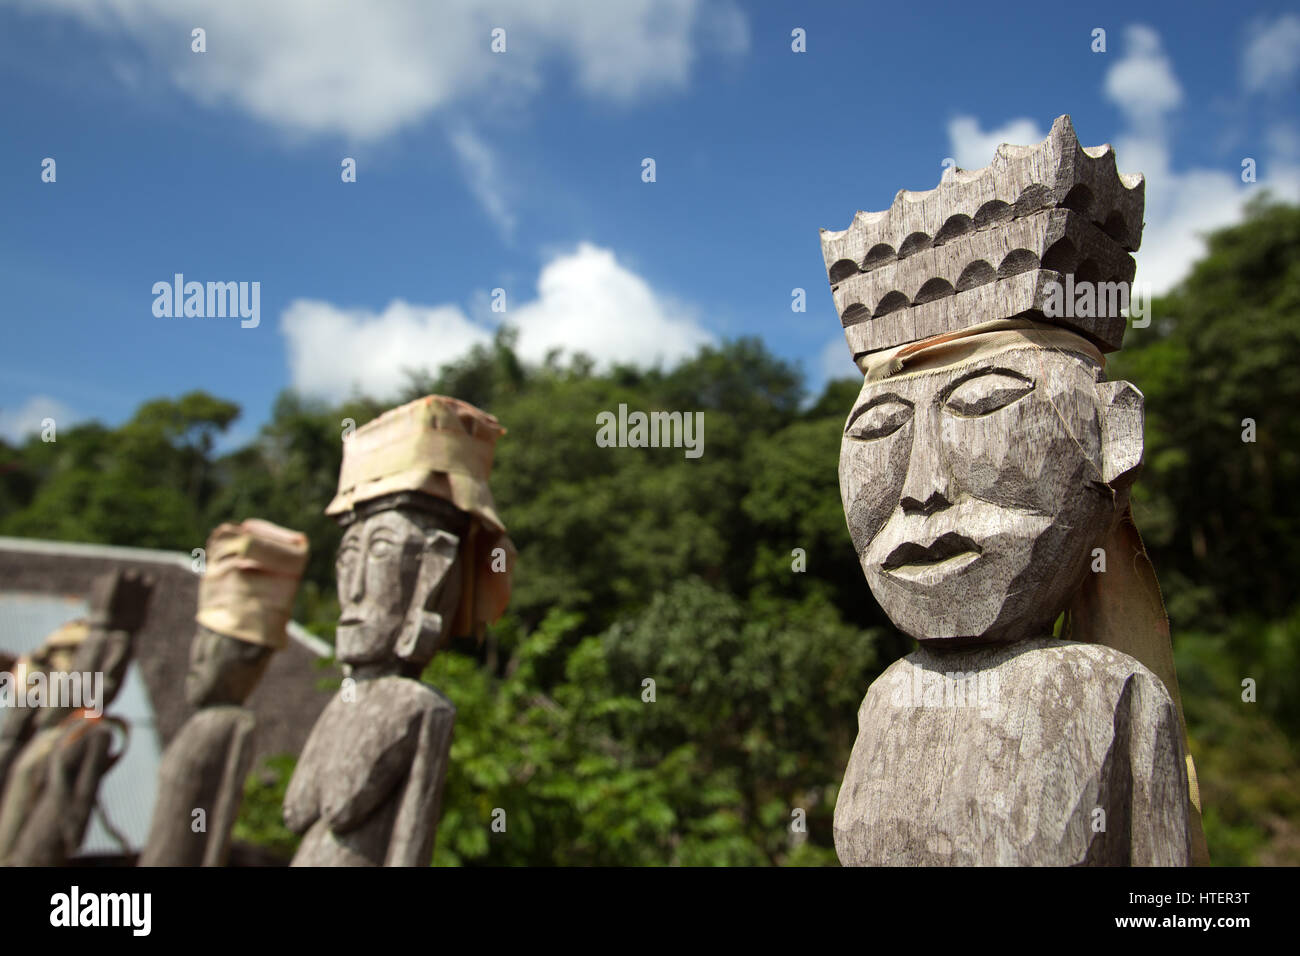 Patung wooden statues of the Dayak or ethnic minorities of East Kalimantan in Borneo Stock Photo